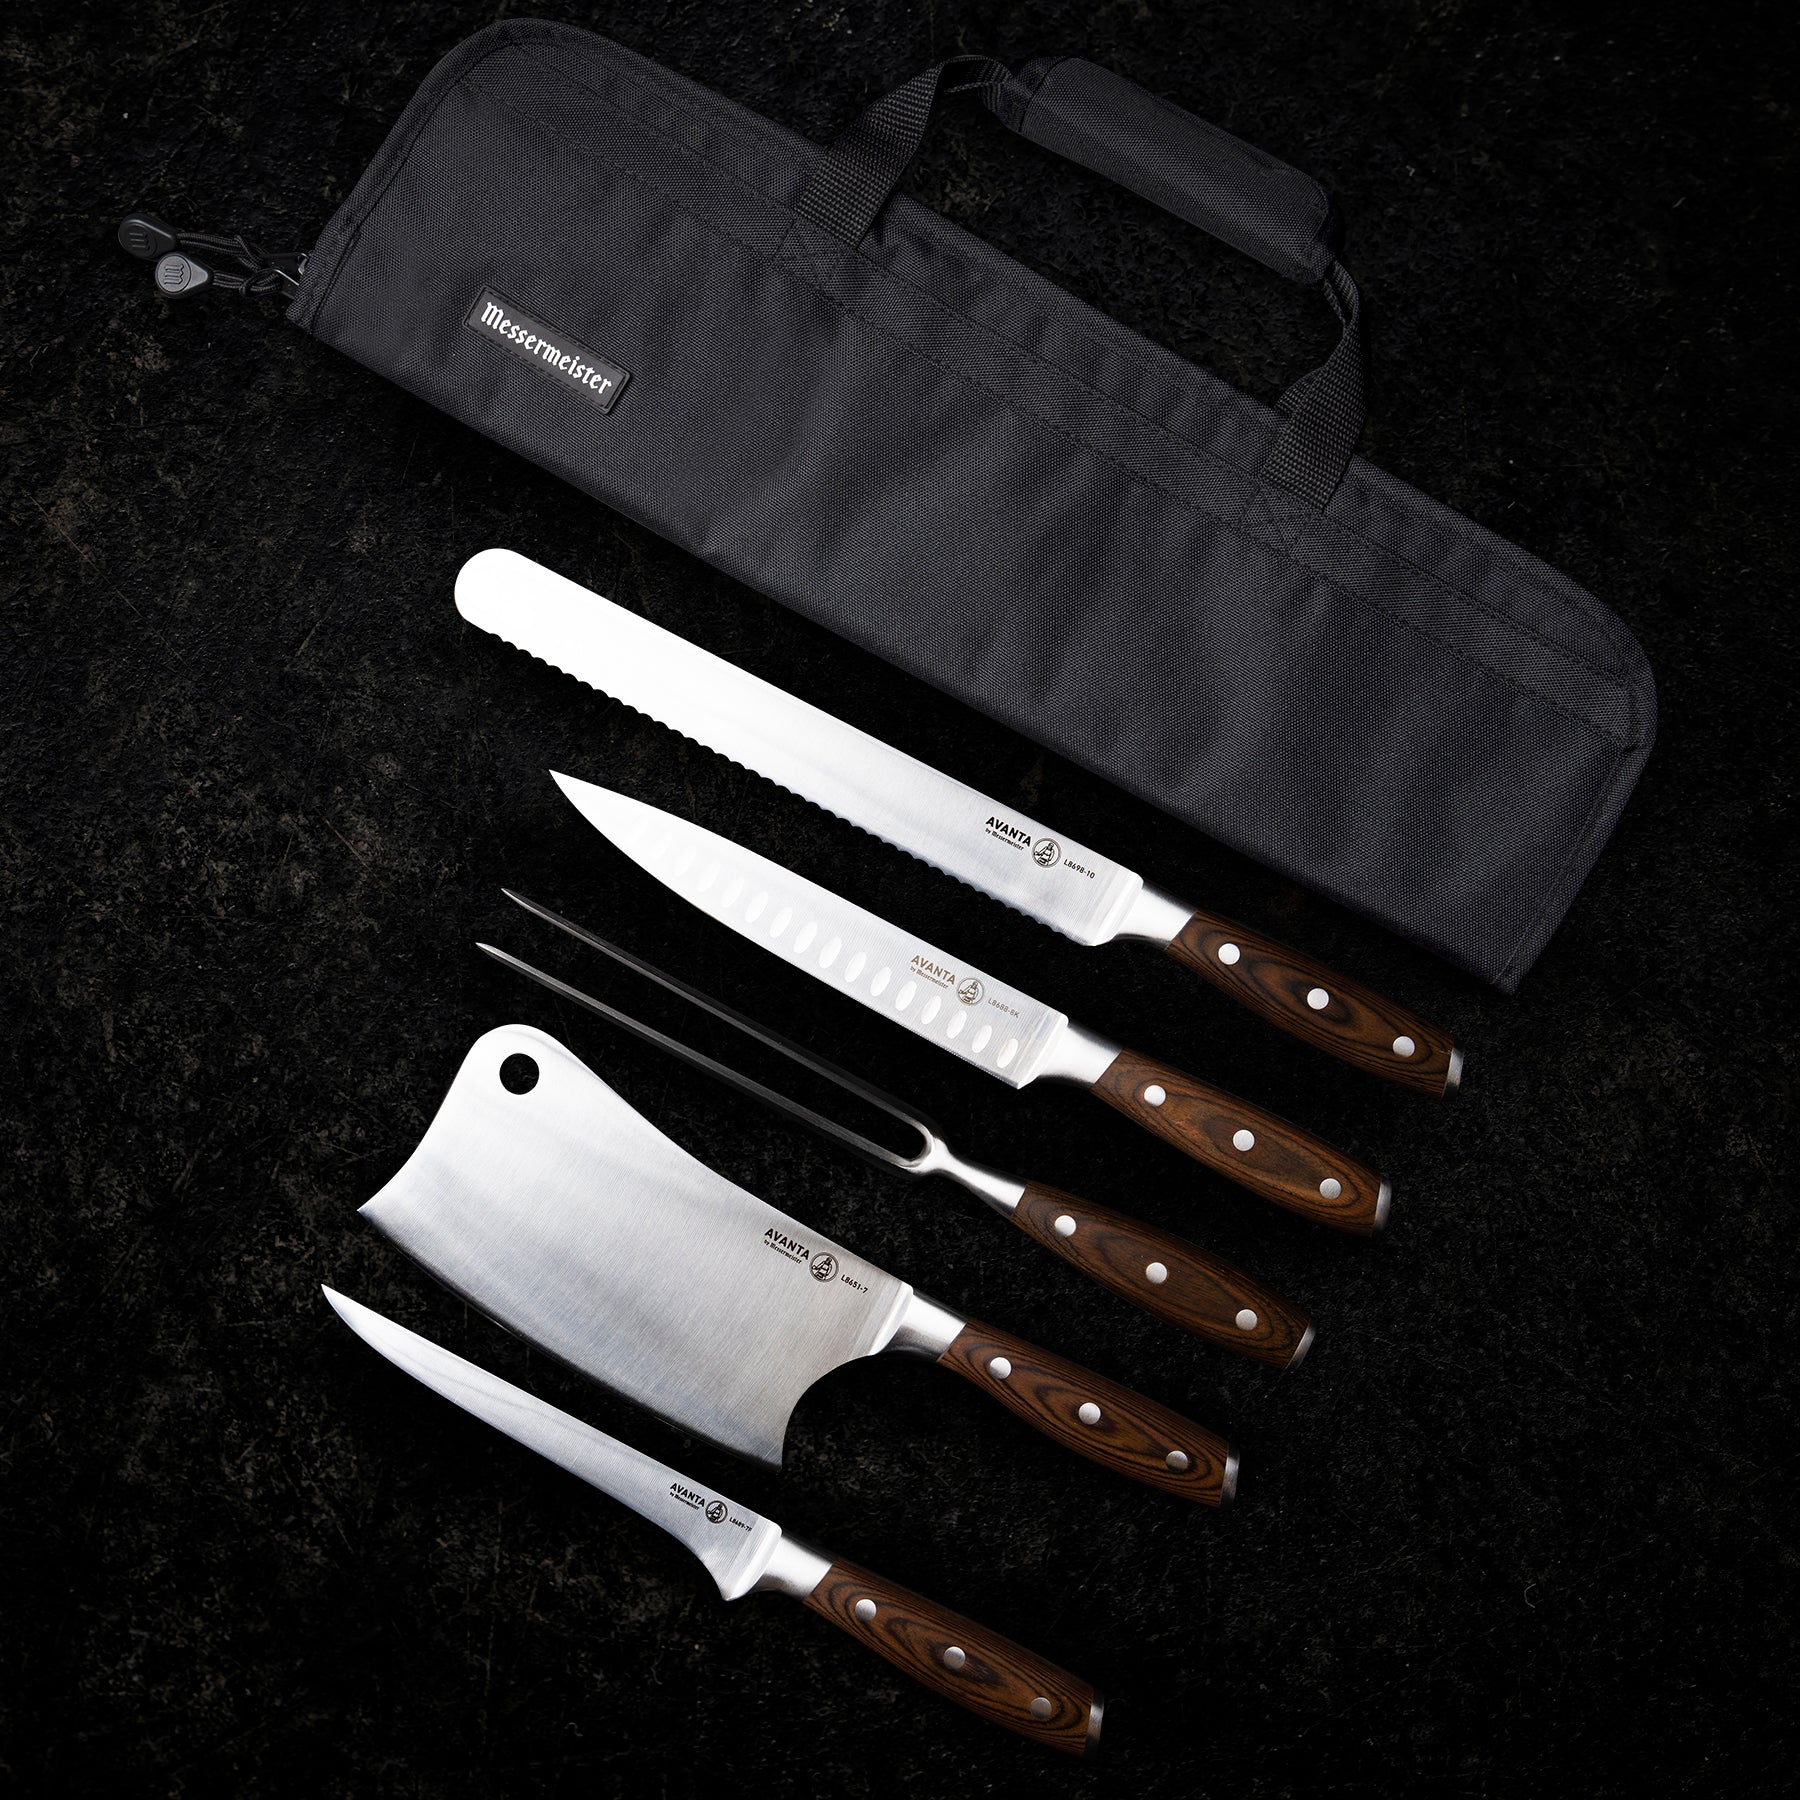 Stainless Steel Kitchen Knife Set